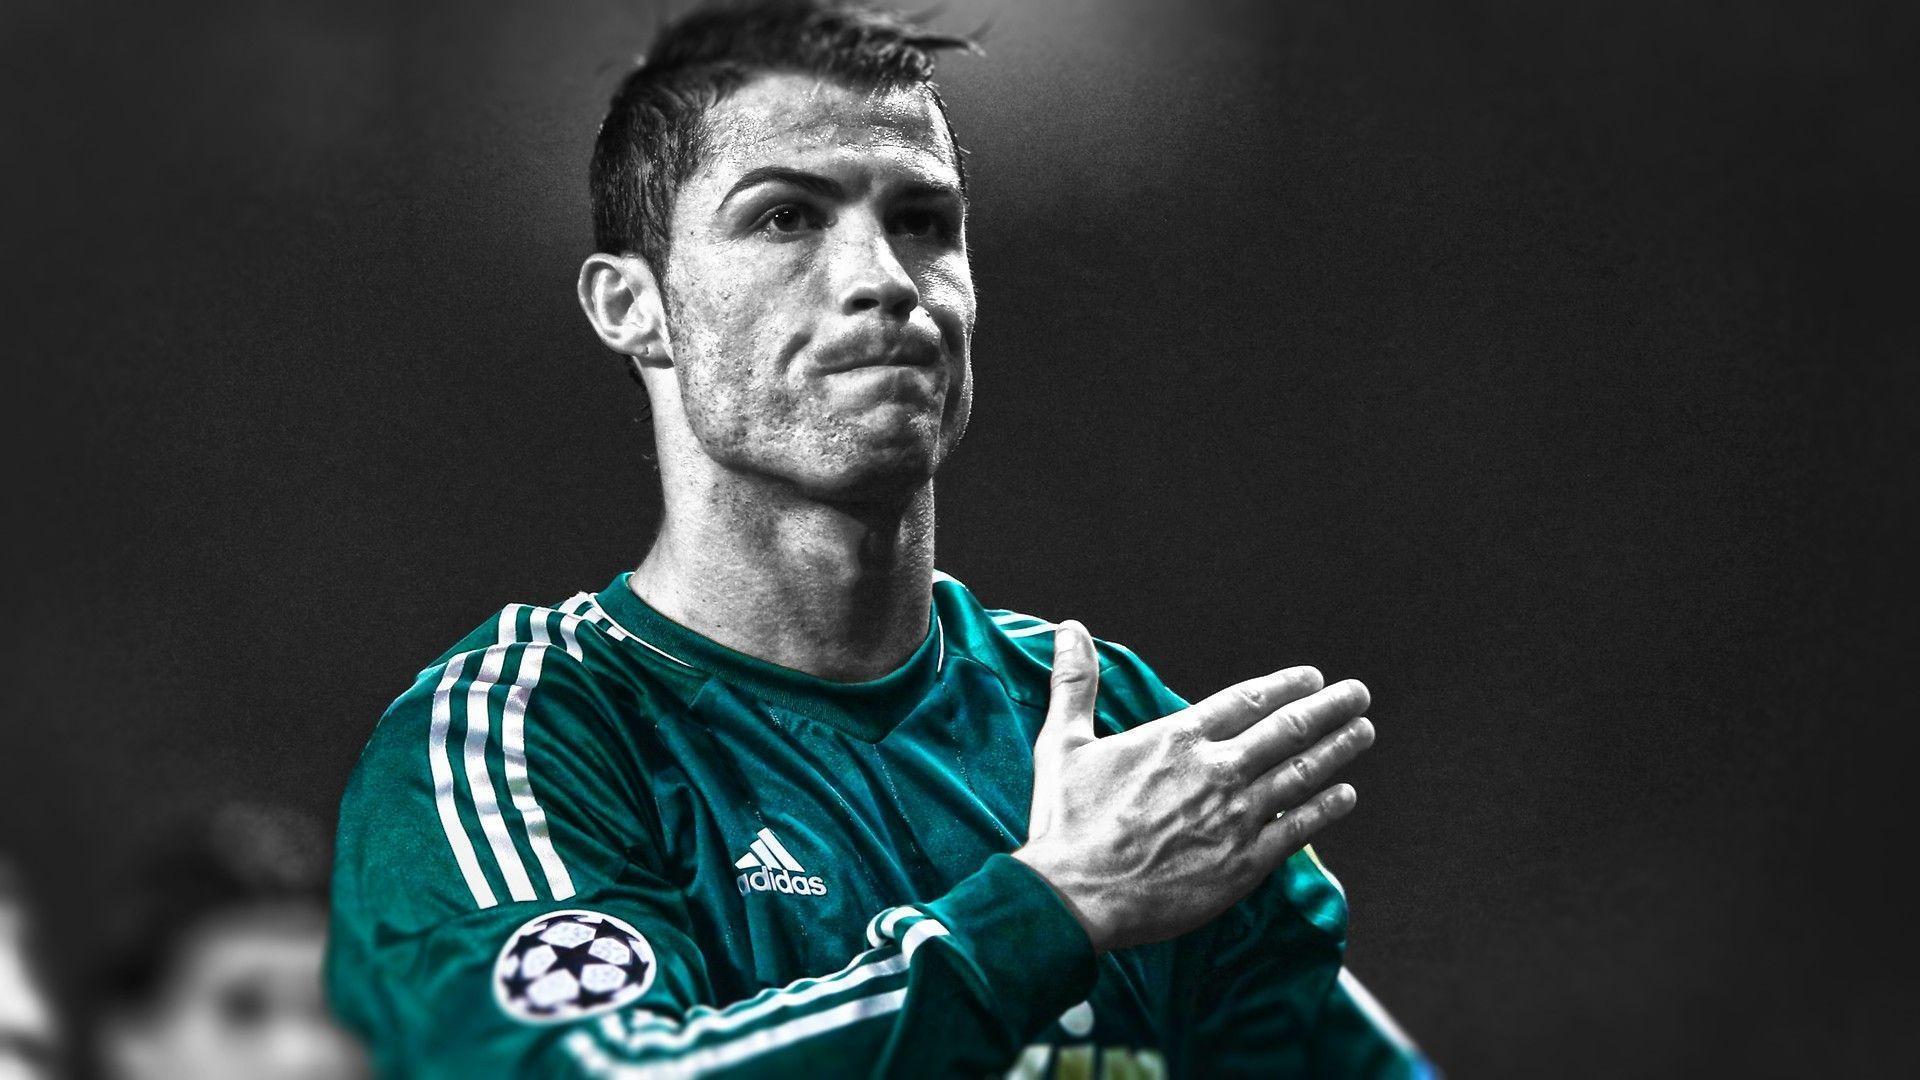 Cristiano Ronaldo Sport Wallpaper HD. Download High Quality